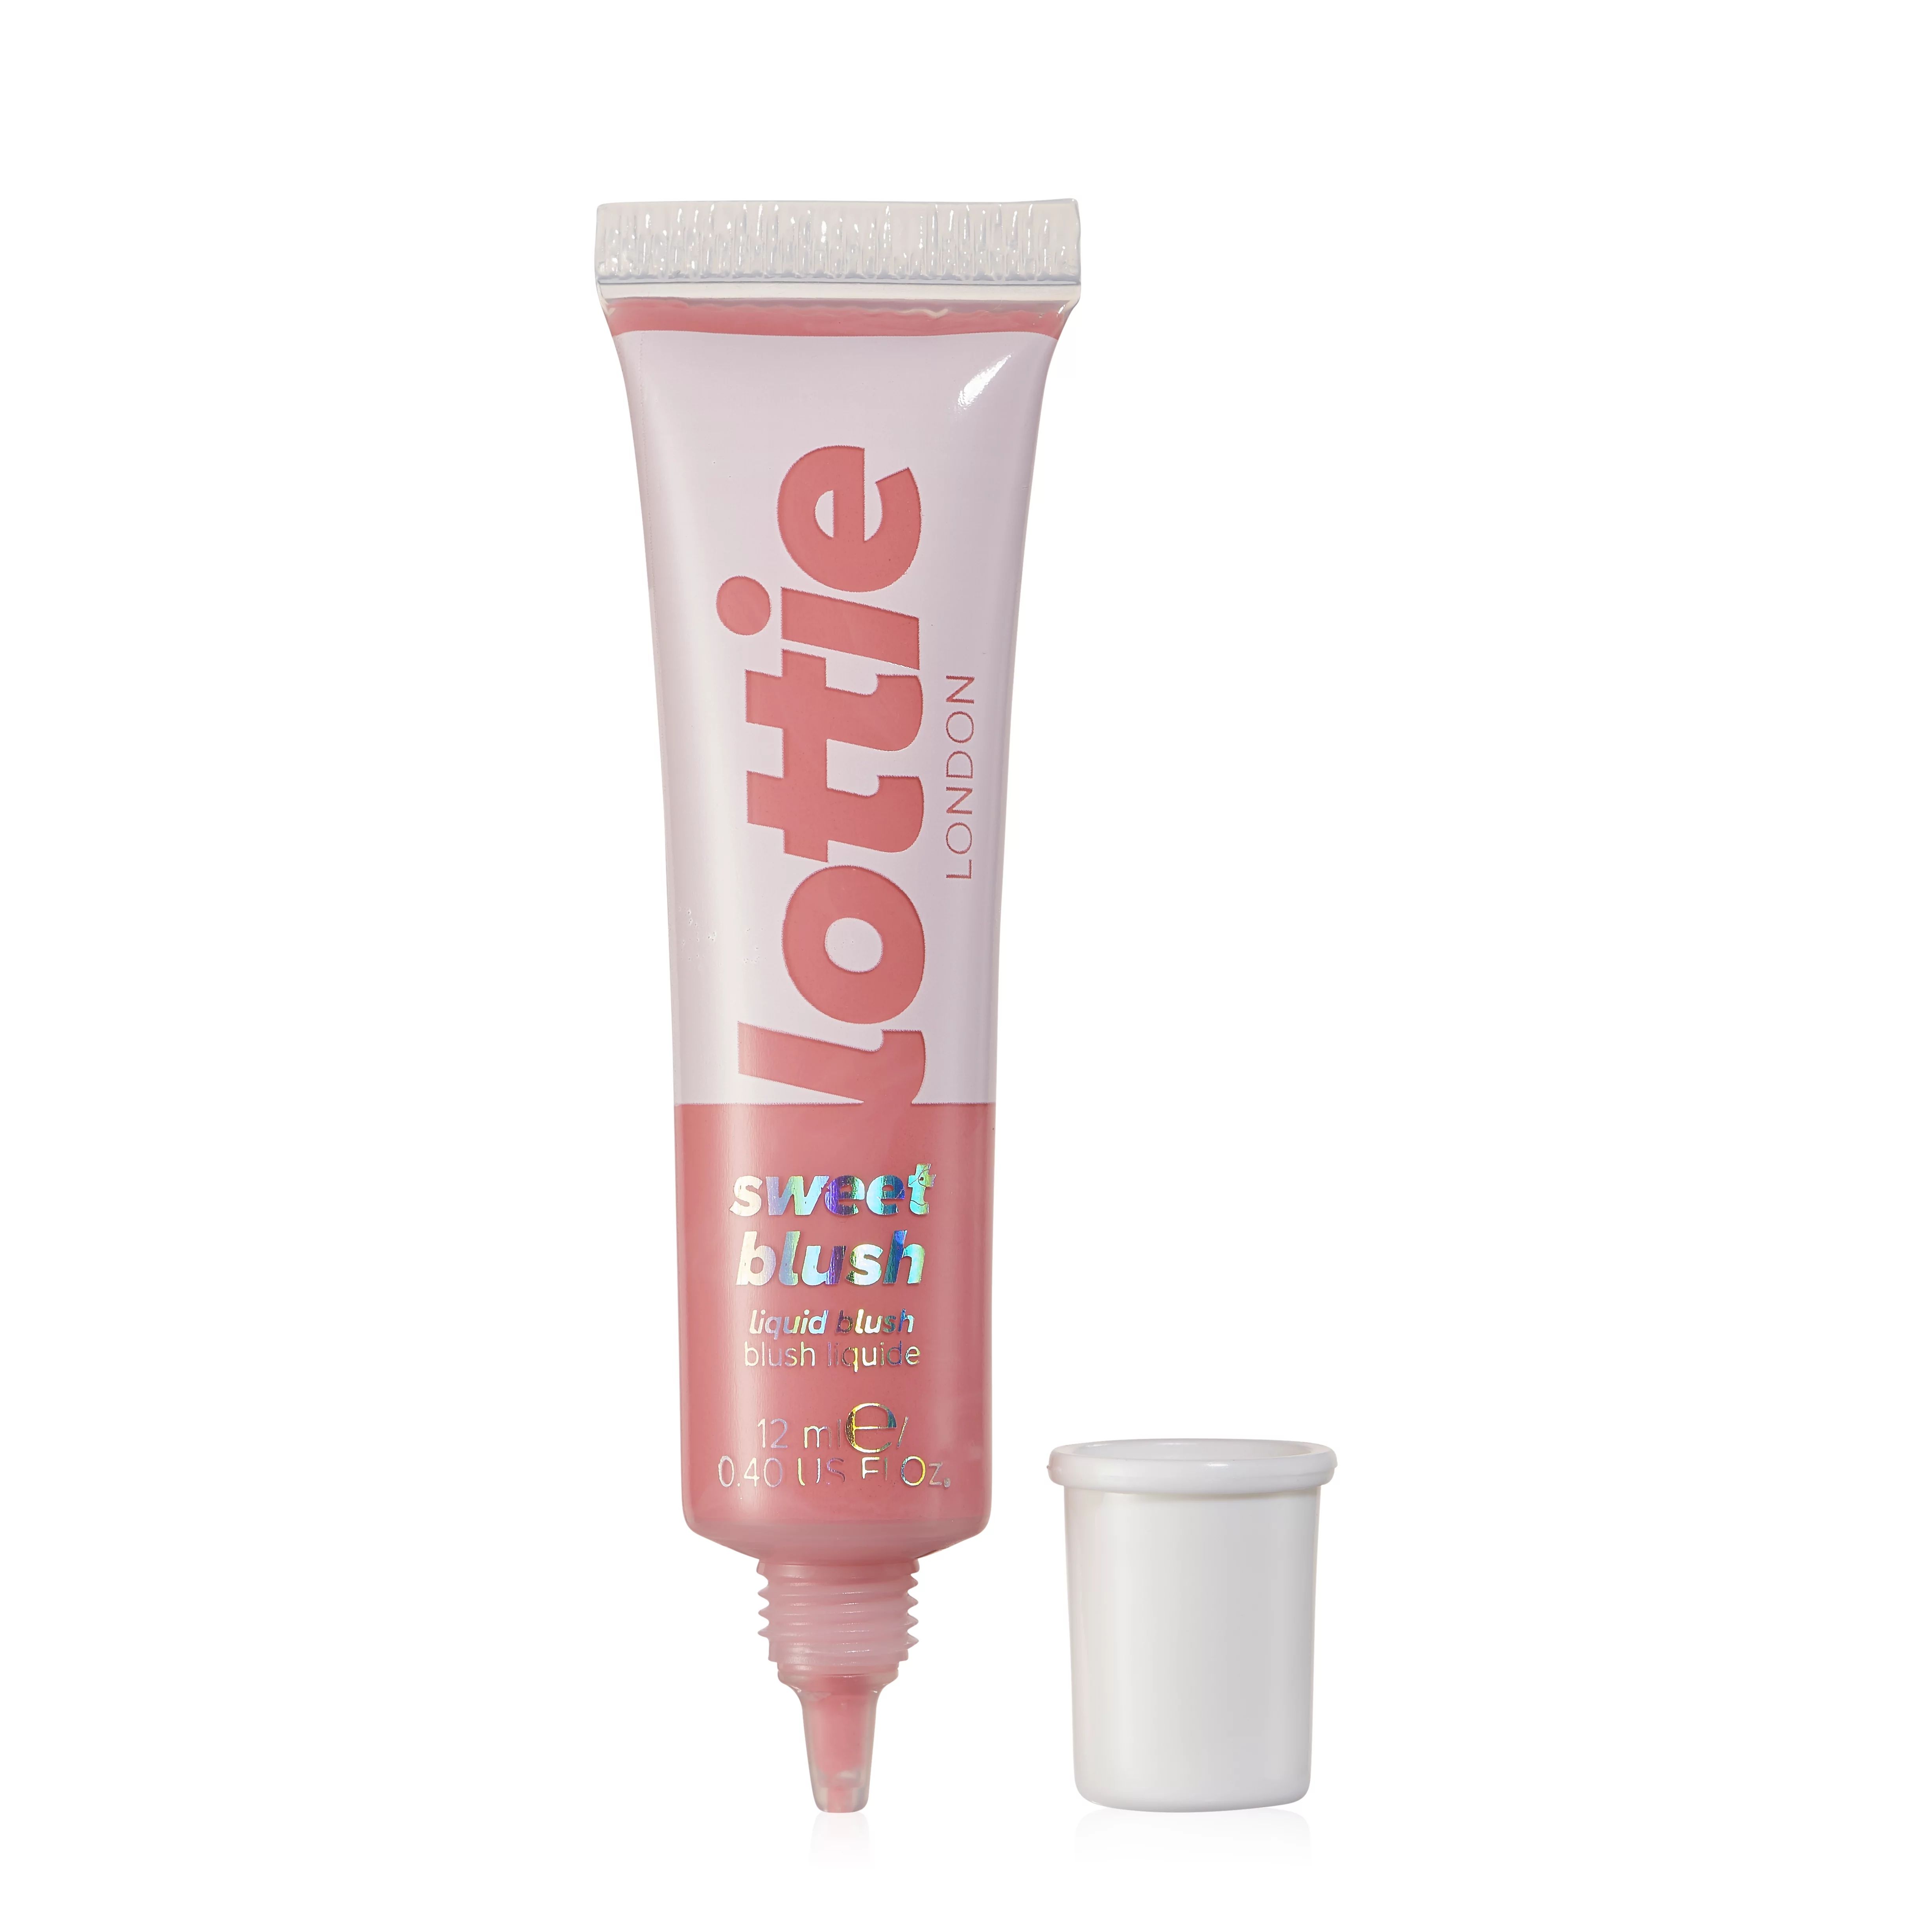 Lottie London Sweet blush, Lightweight Liquid Blush, Blushing Pink, 12 ml | Walmart (US)